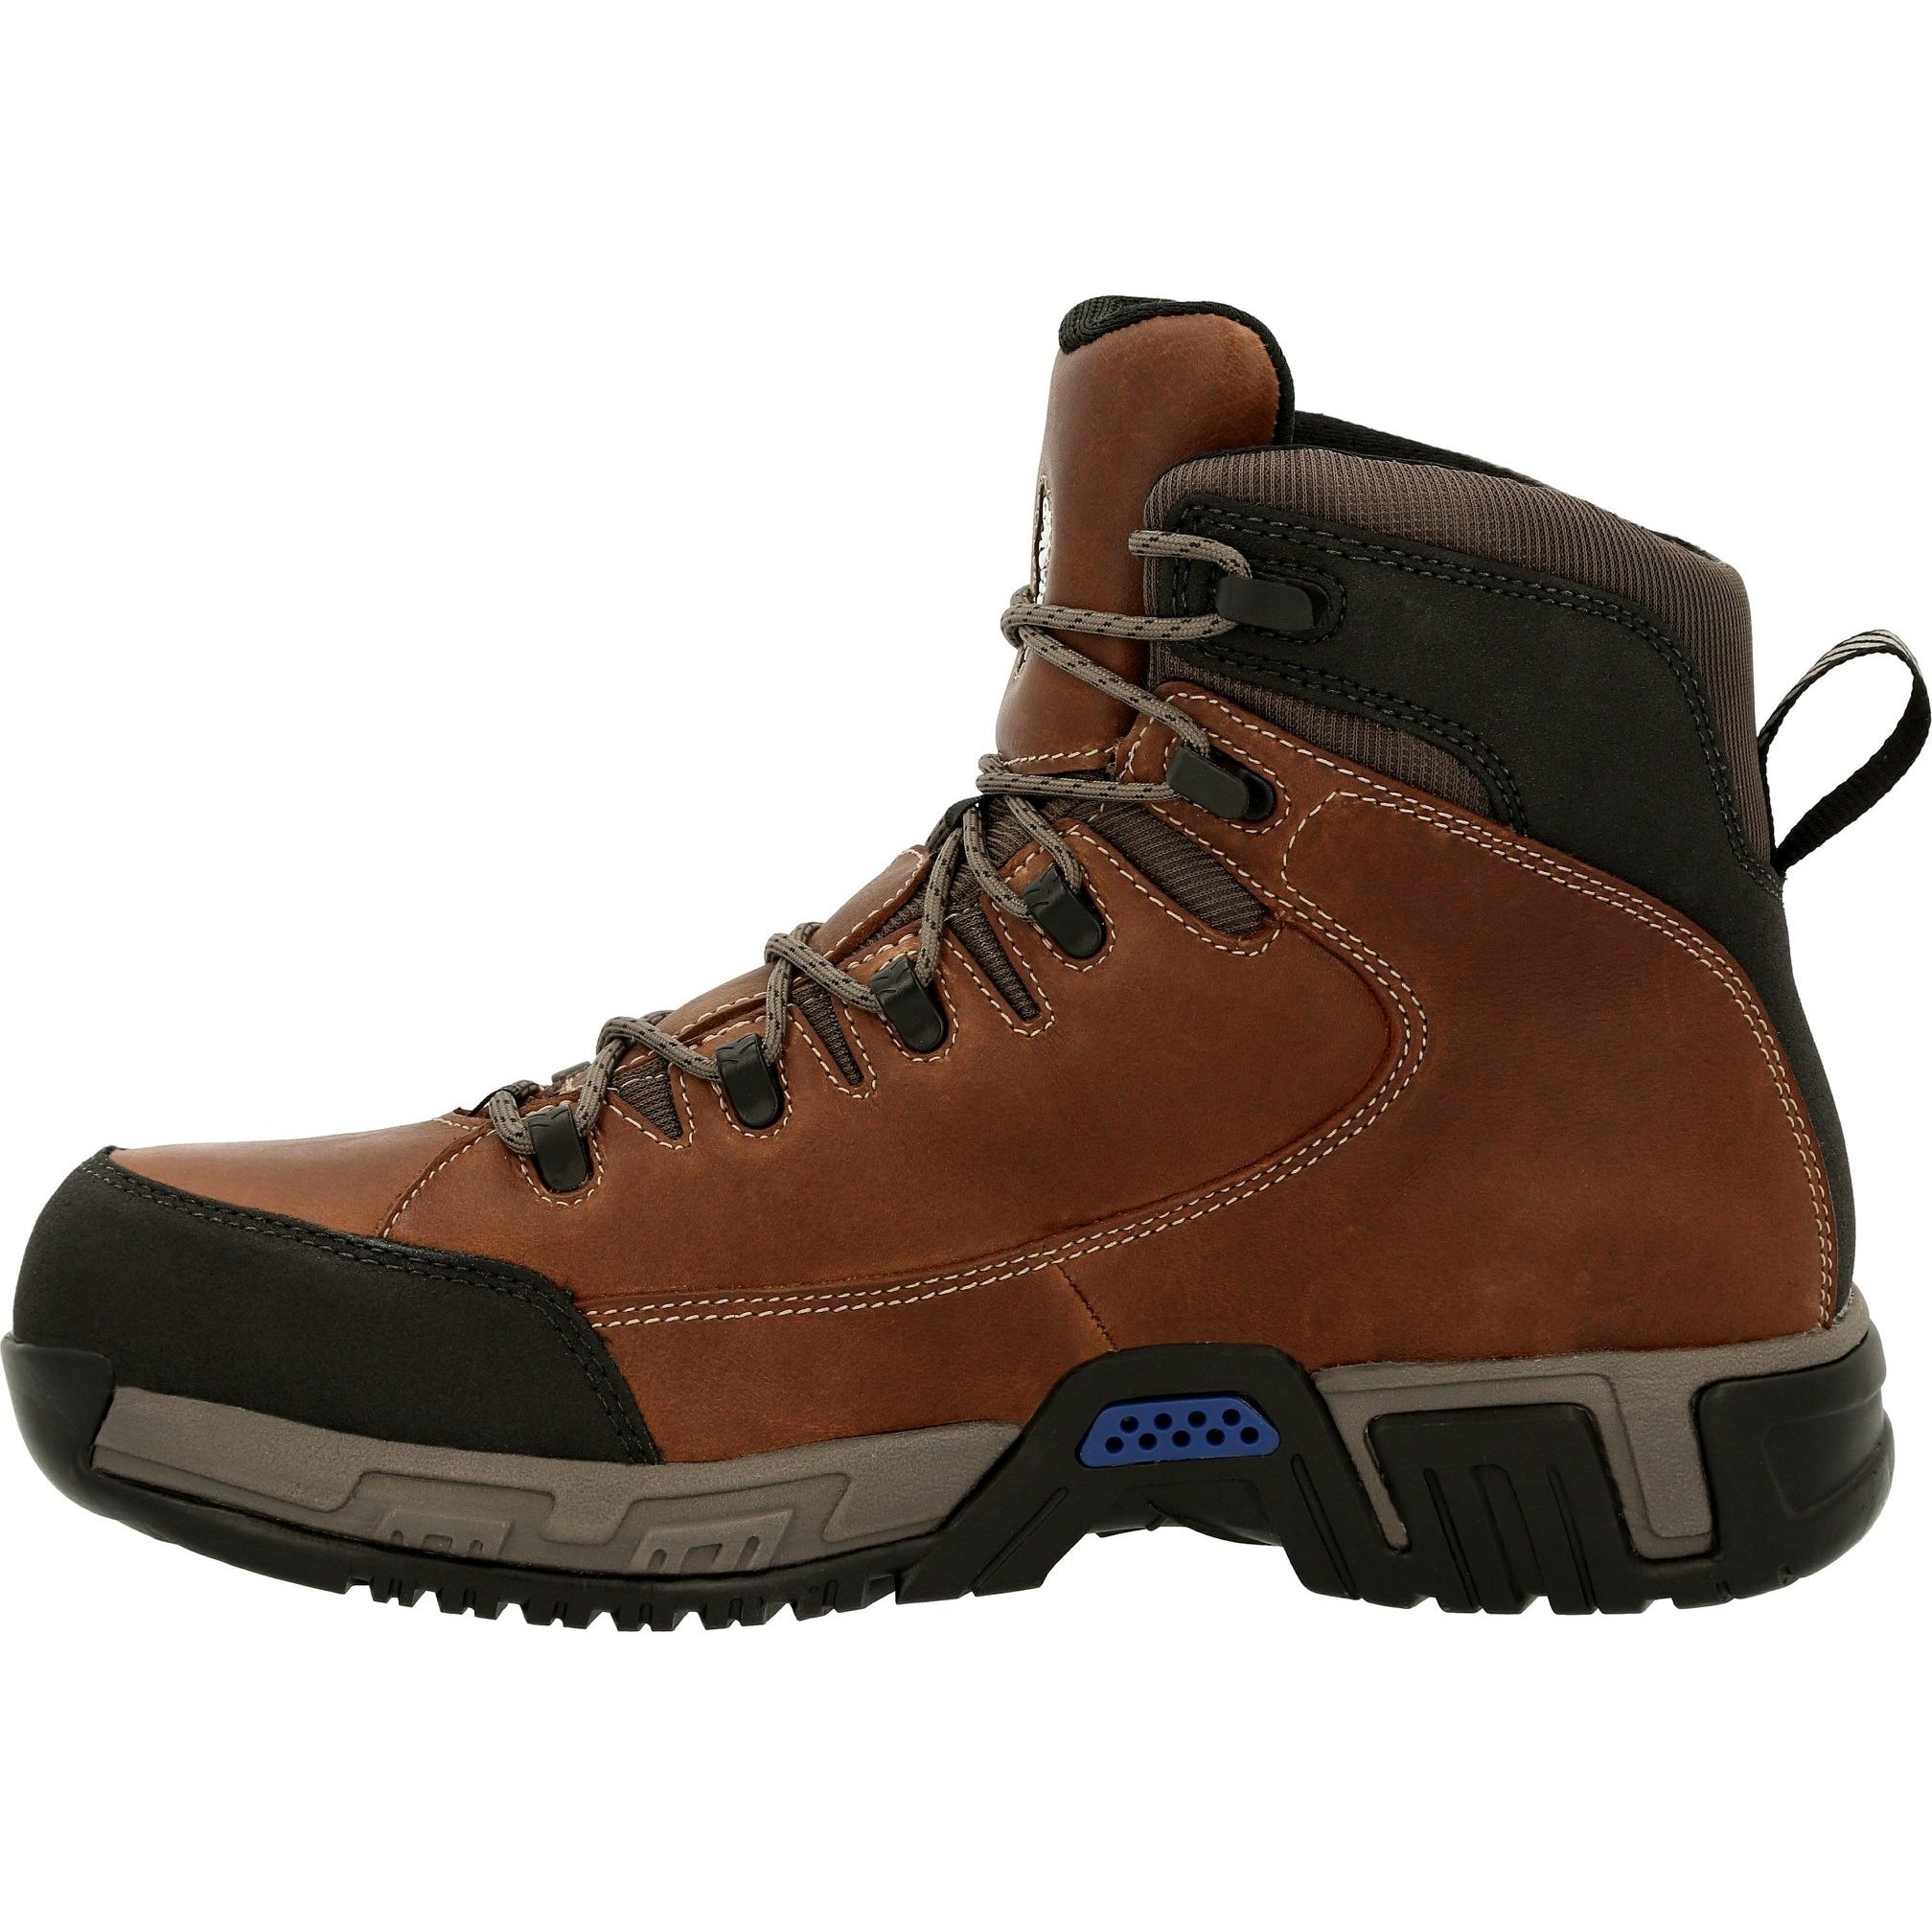 Michelin Men's HydroEdge 6" Alloy Toe WP PR Work Boot - Brown- MIC0006  - Overlook Boots